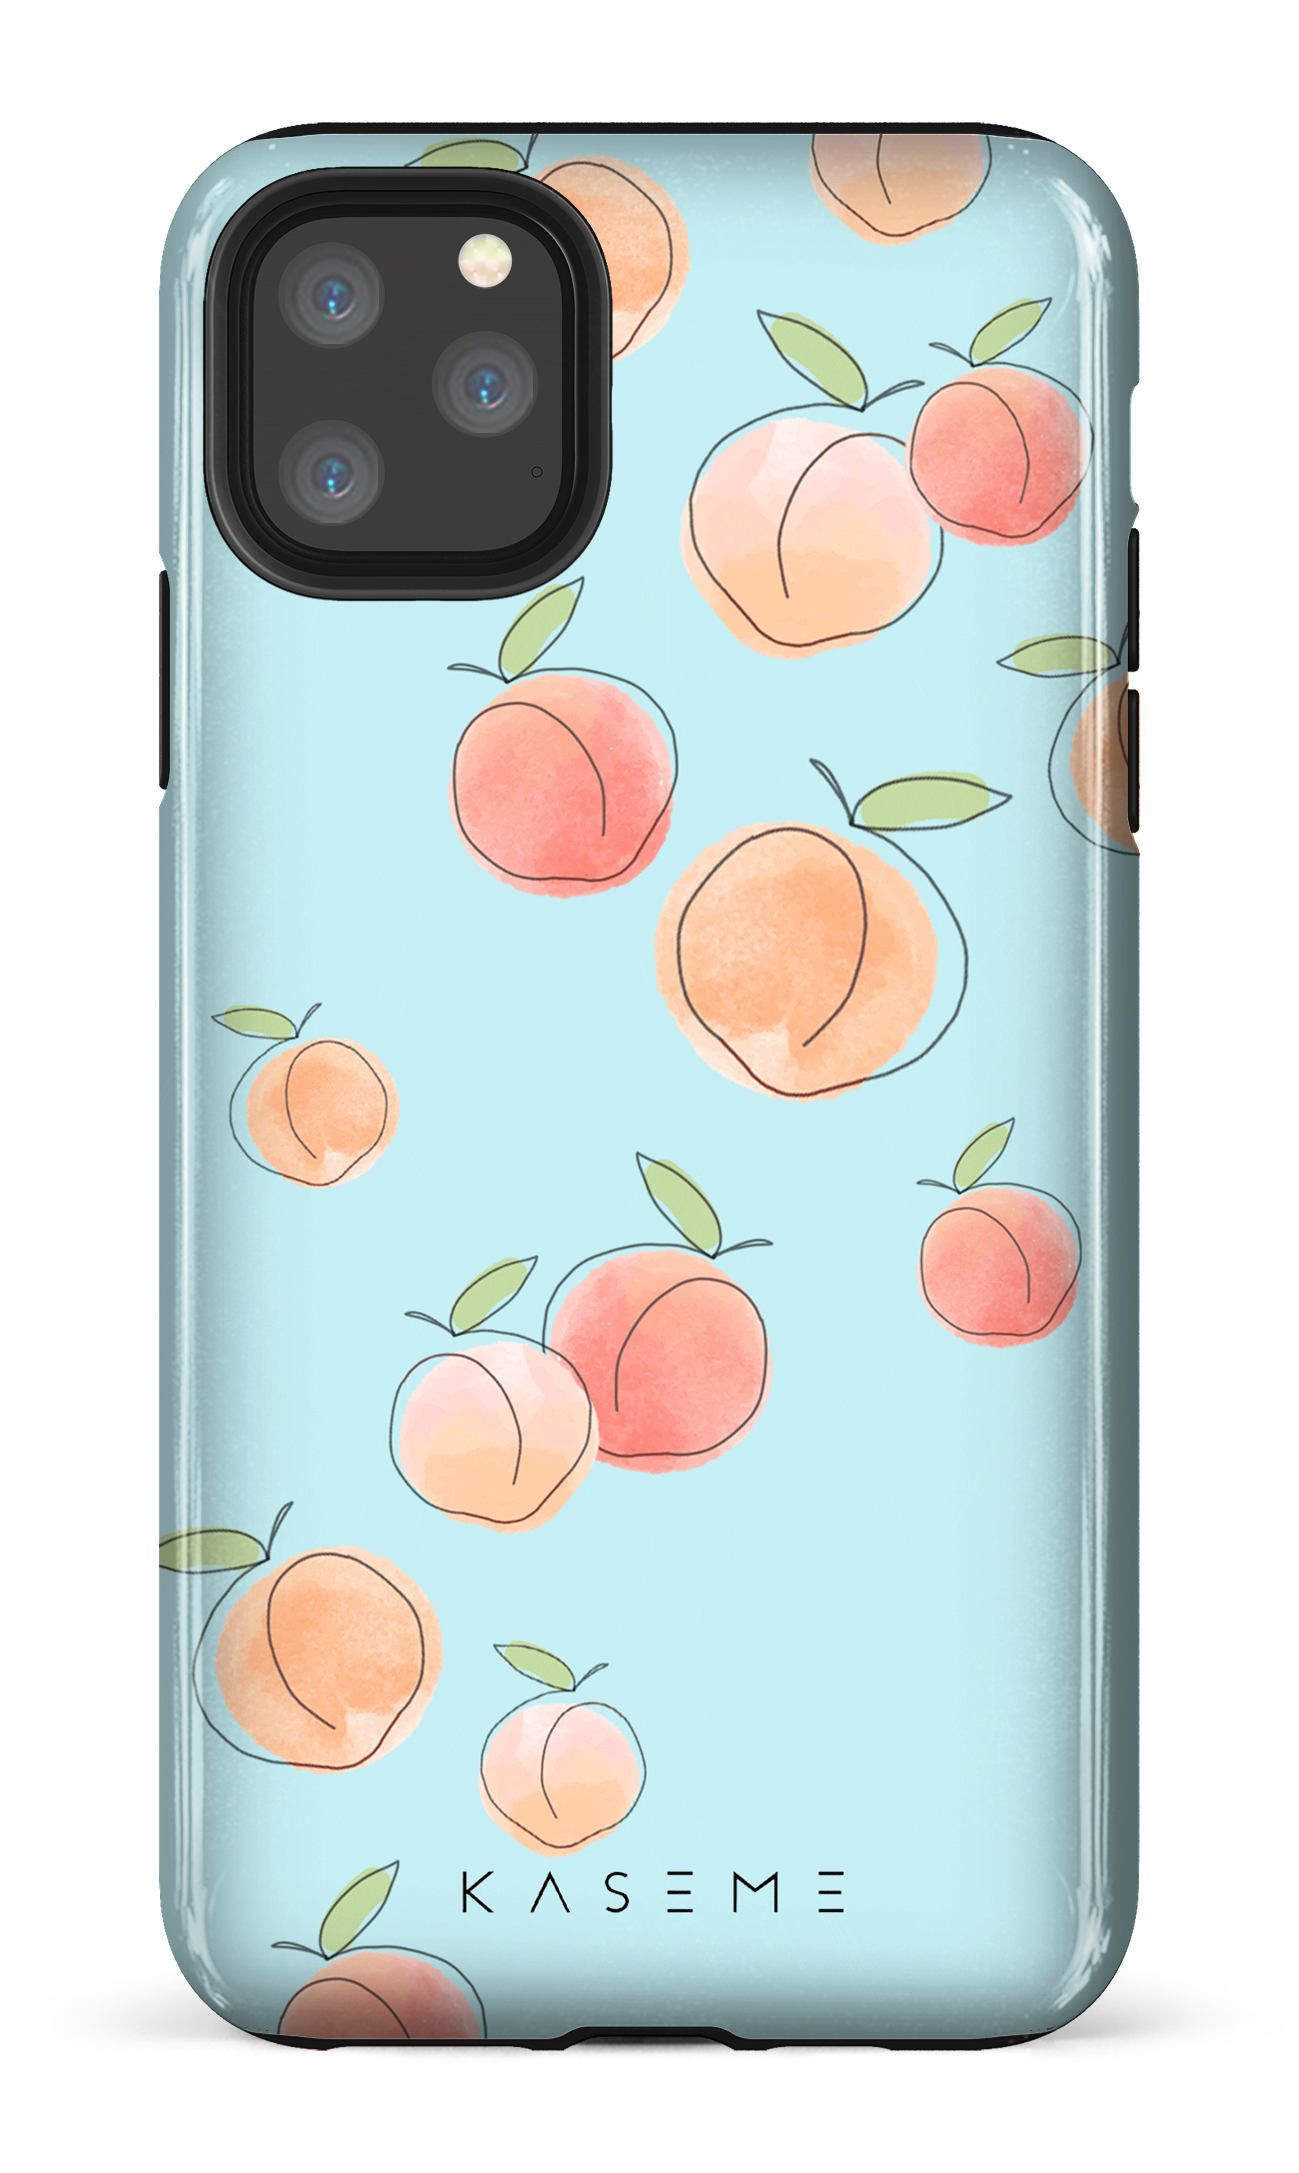 Peachy Blue - iPhone 11 Pro Max